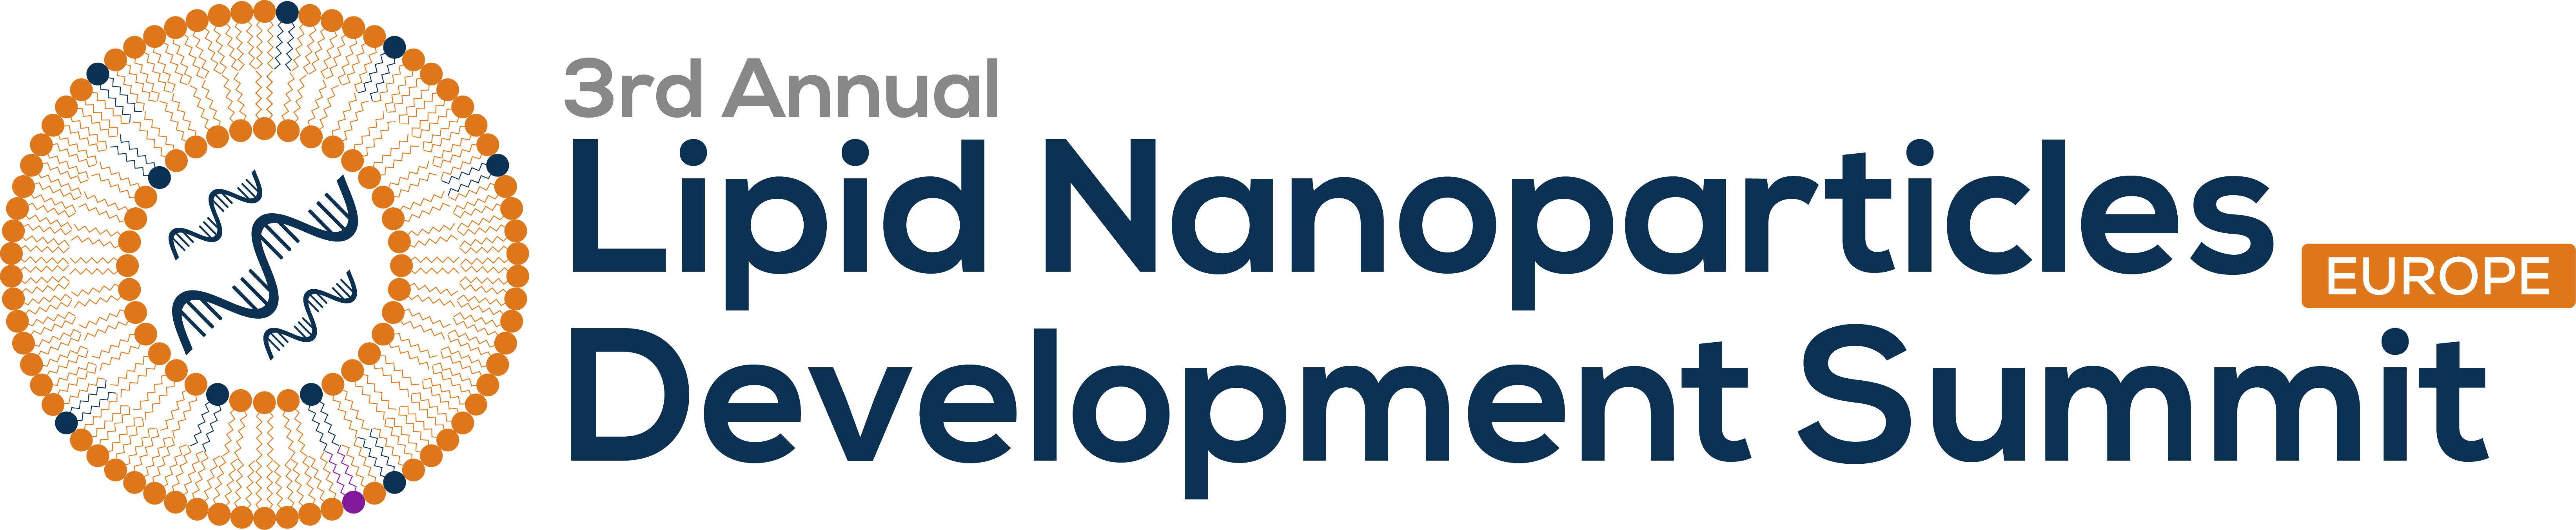 3rd Lipid Nanoparticles Development Summit Europe logo